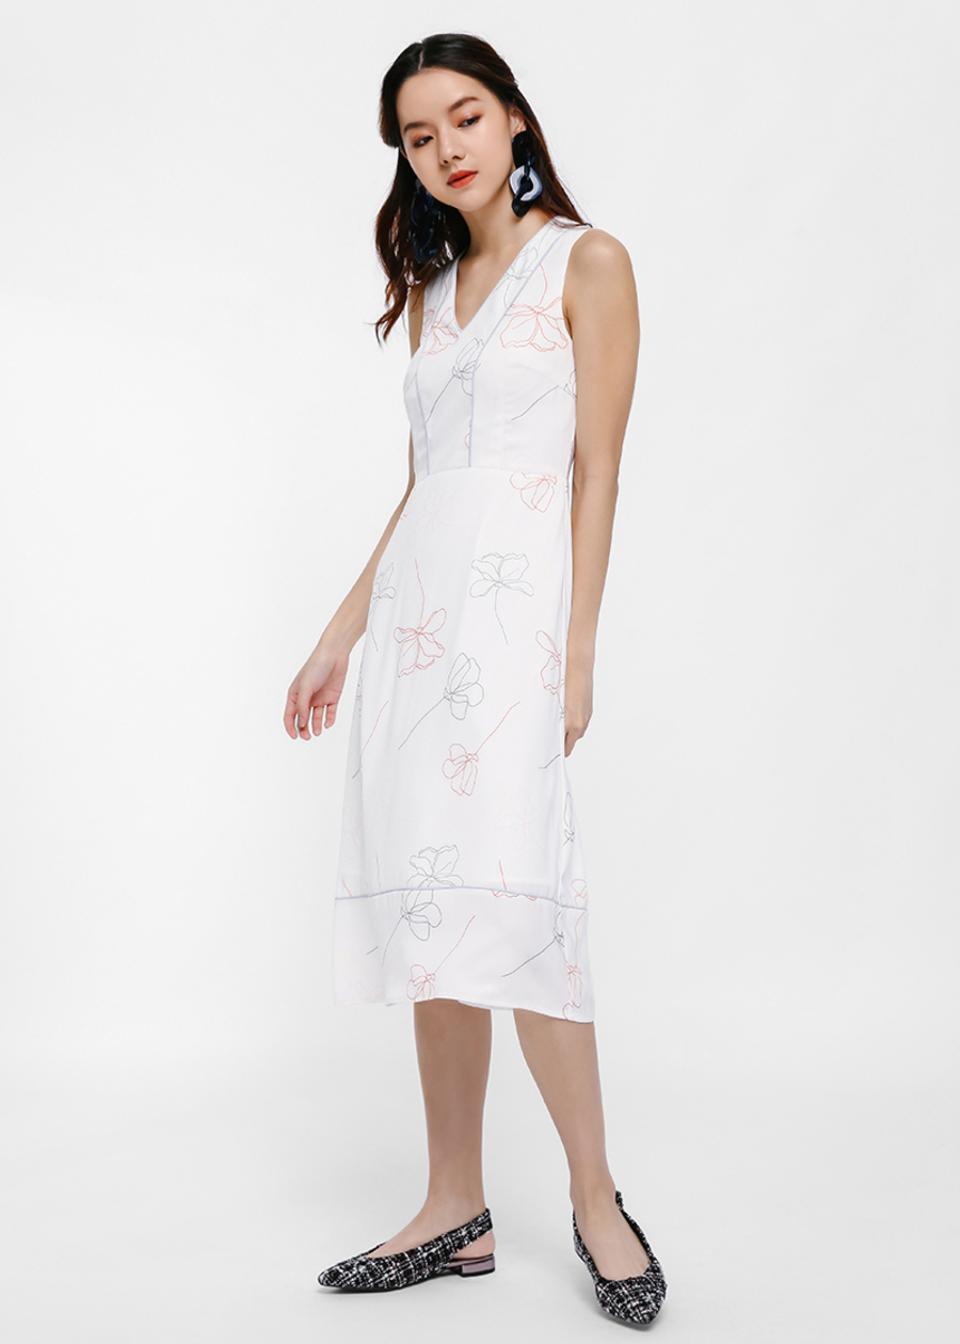 Buy Vietta Printed Midi Dress @ Love, Bonito | Shop Women's Fashion ...